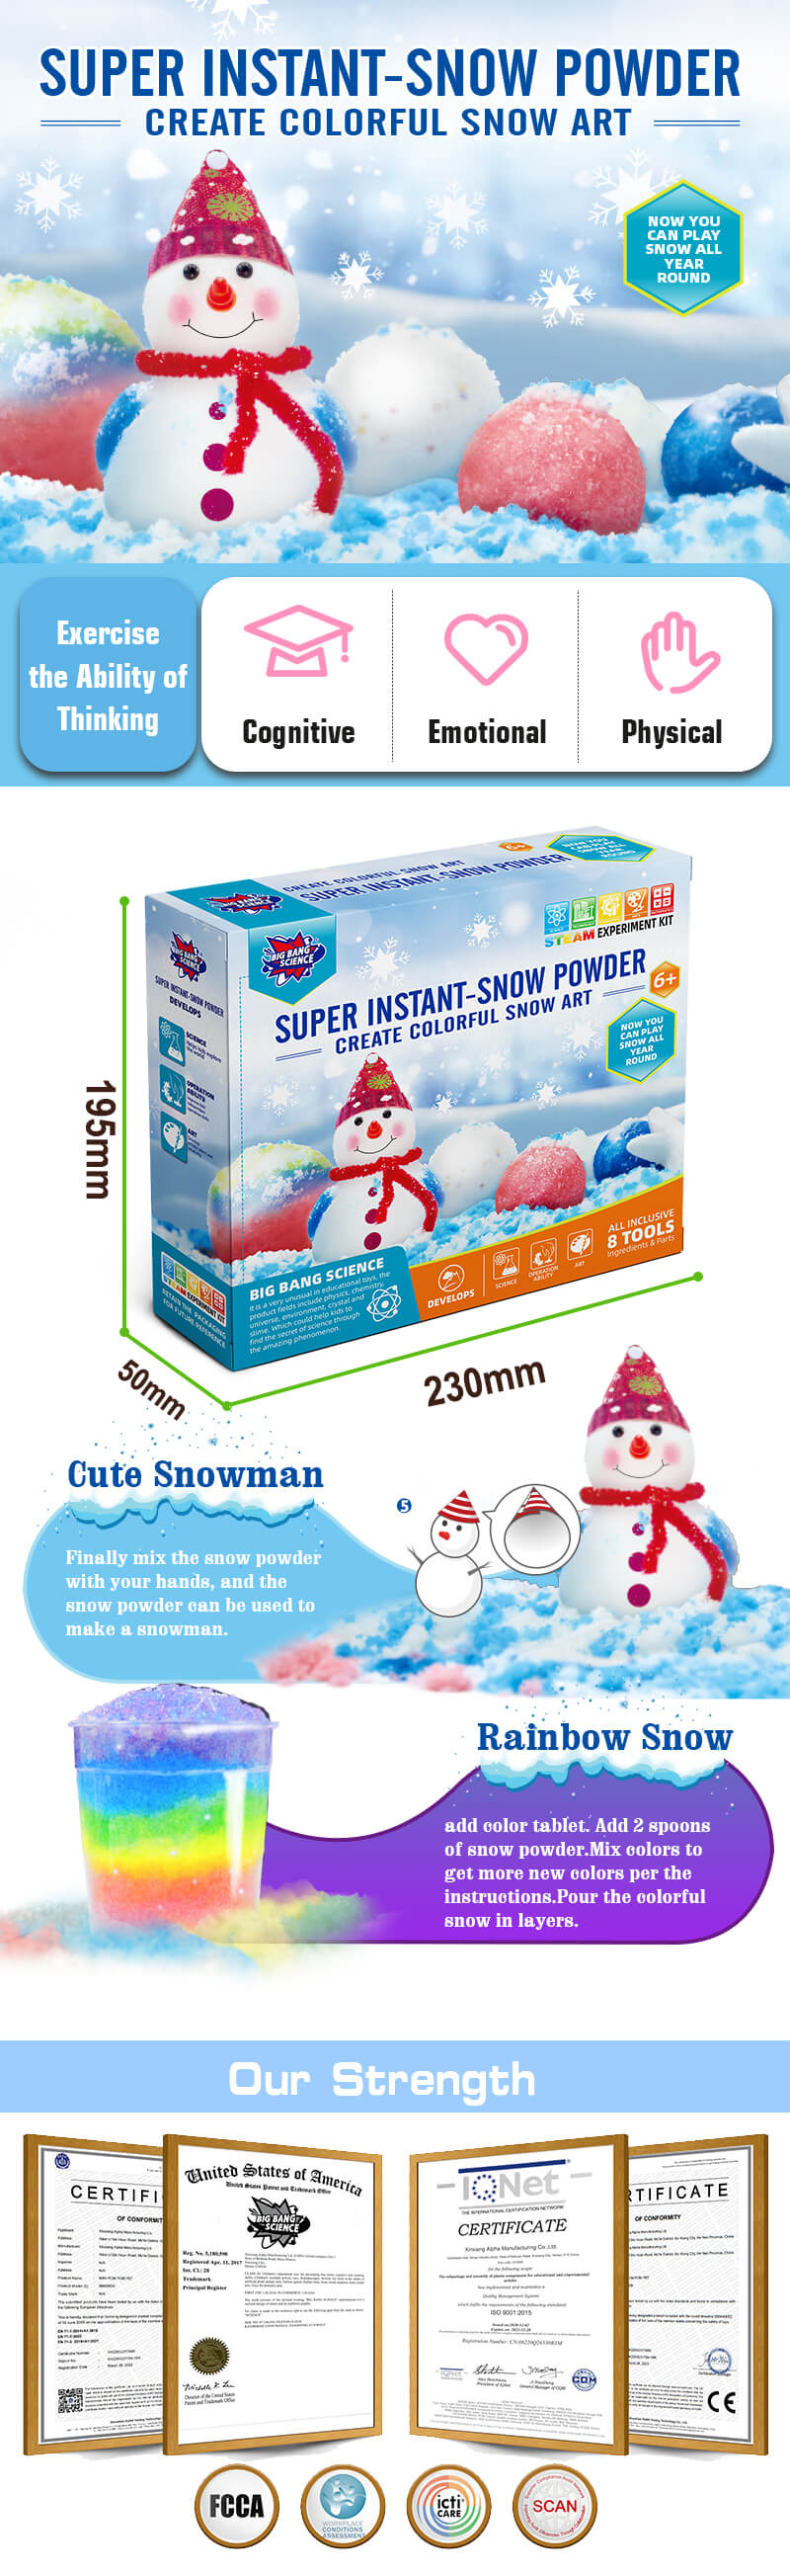 Super-Insta-Snow-Product-details-chart